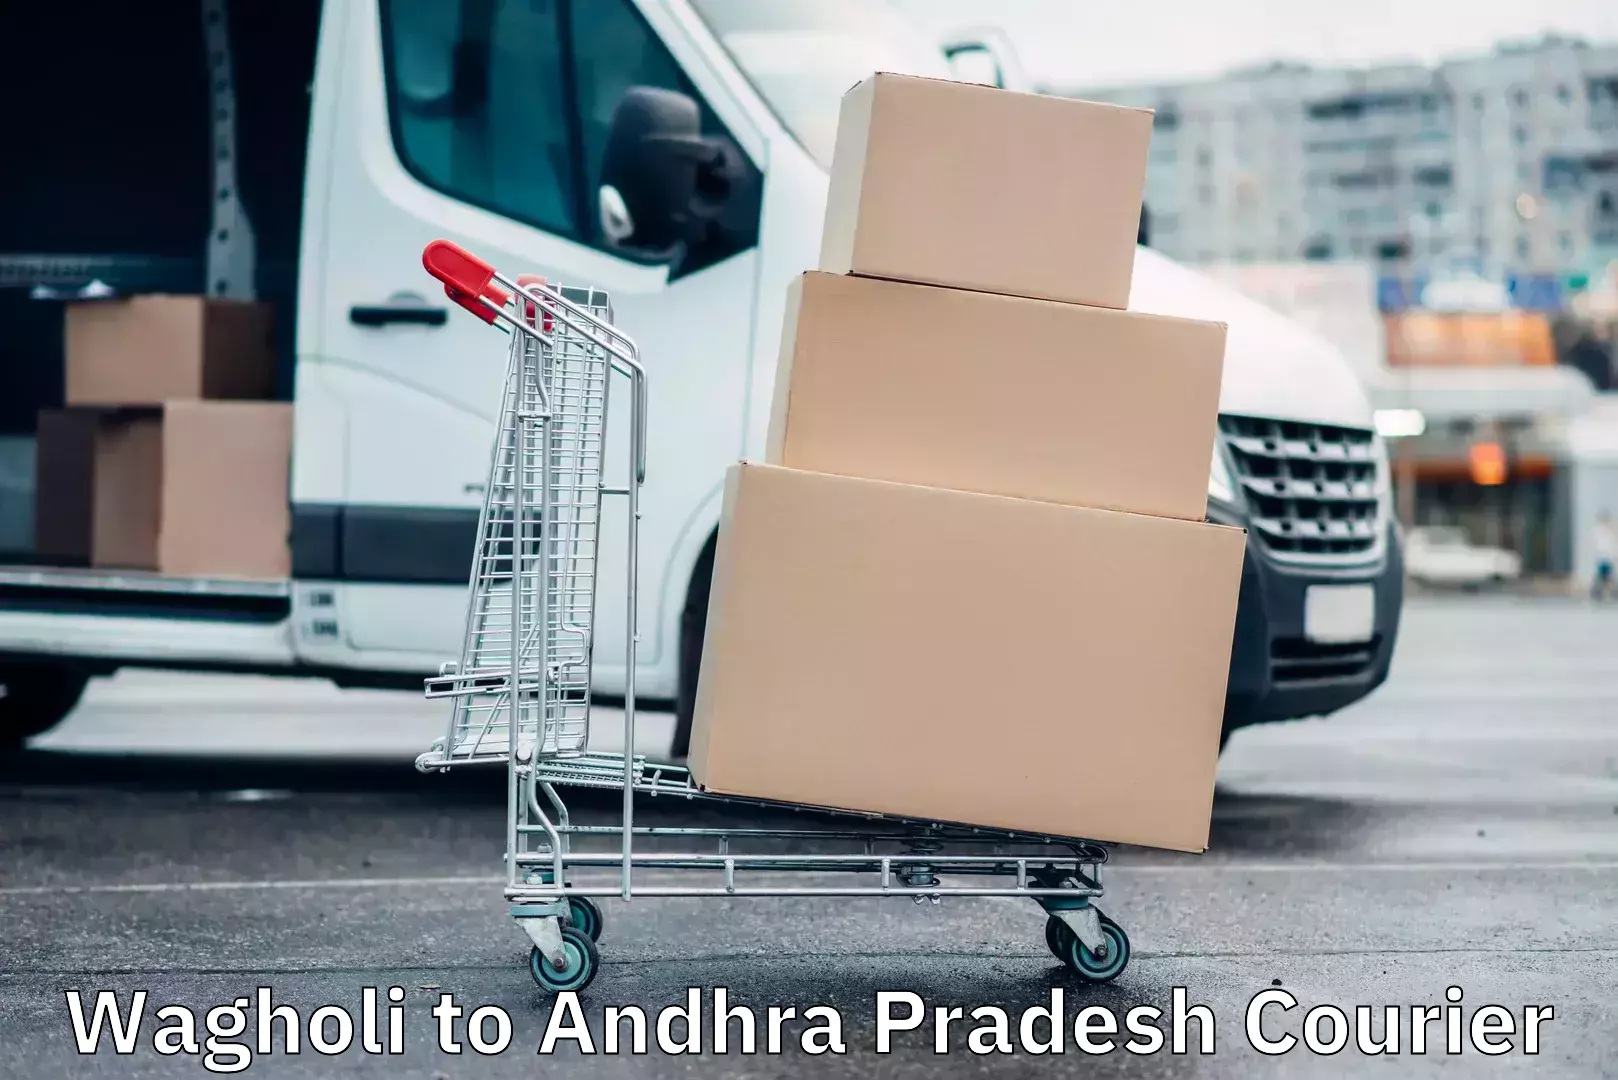 Express logistics service Wagholi to Andhra Pradesh